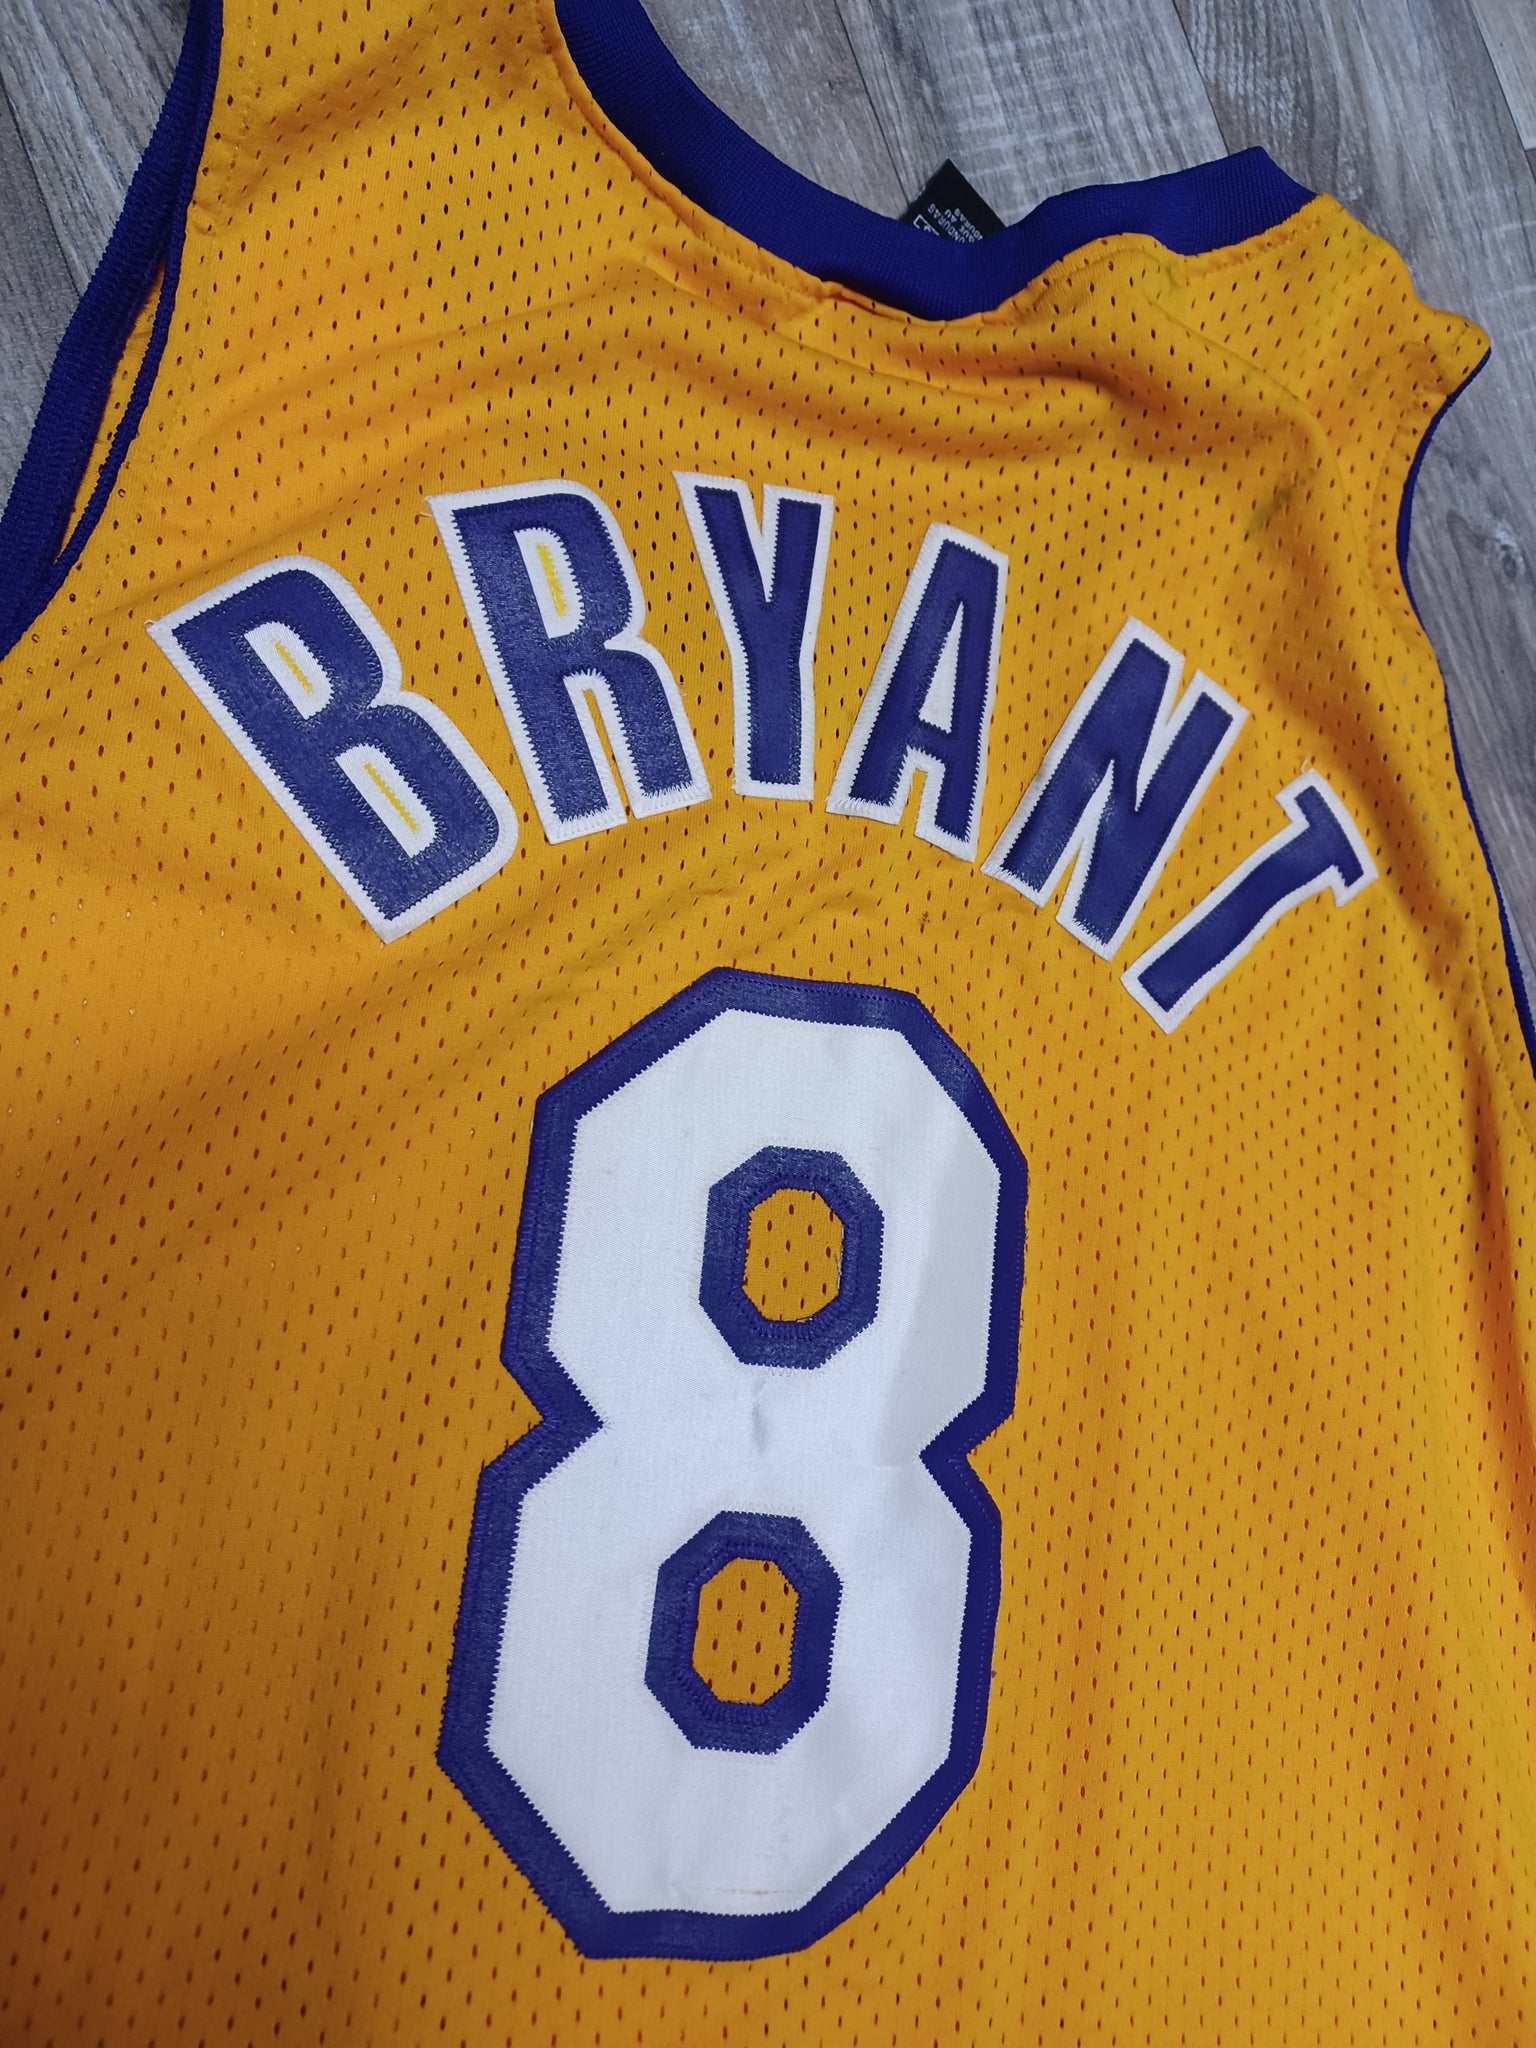 Vintage 90's Nike Jersey - Los Angeles Lakers XXL - Kobe Bryant